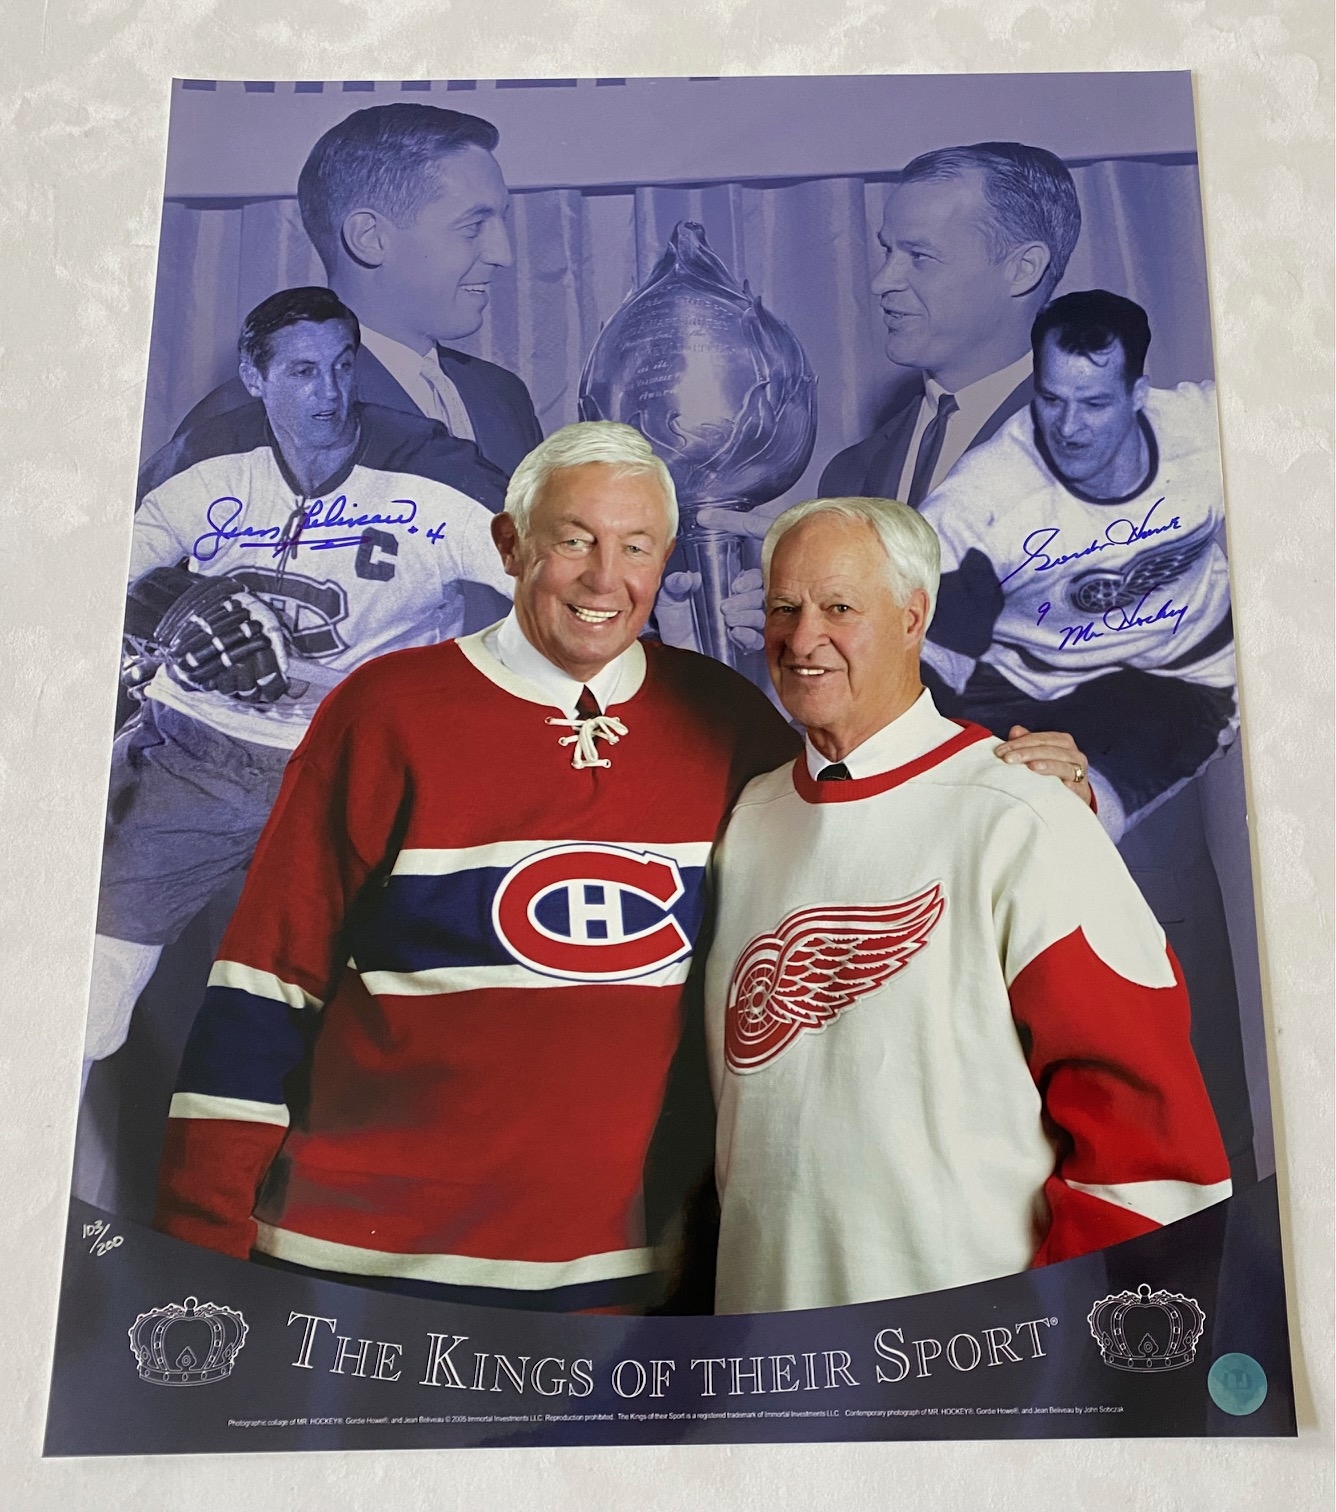 Gordie Howe & Jean Beliveau Dual Signed 16x20 Photo #103/200 with Mr Hockey Note